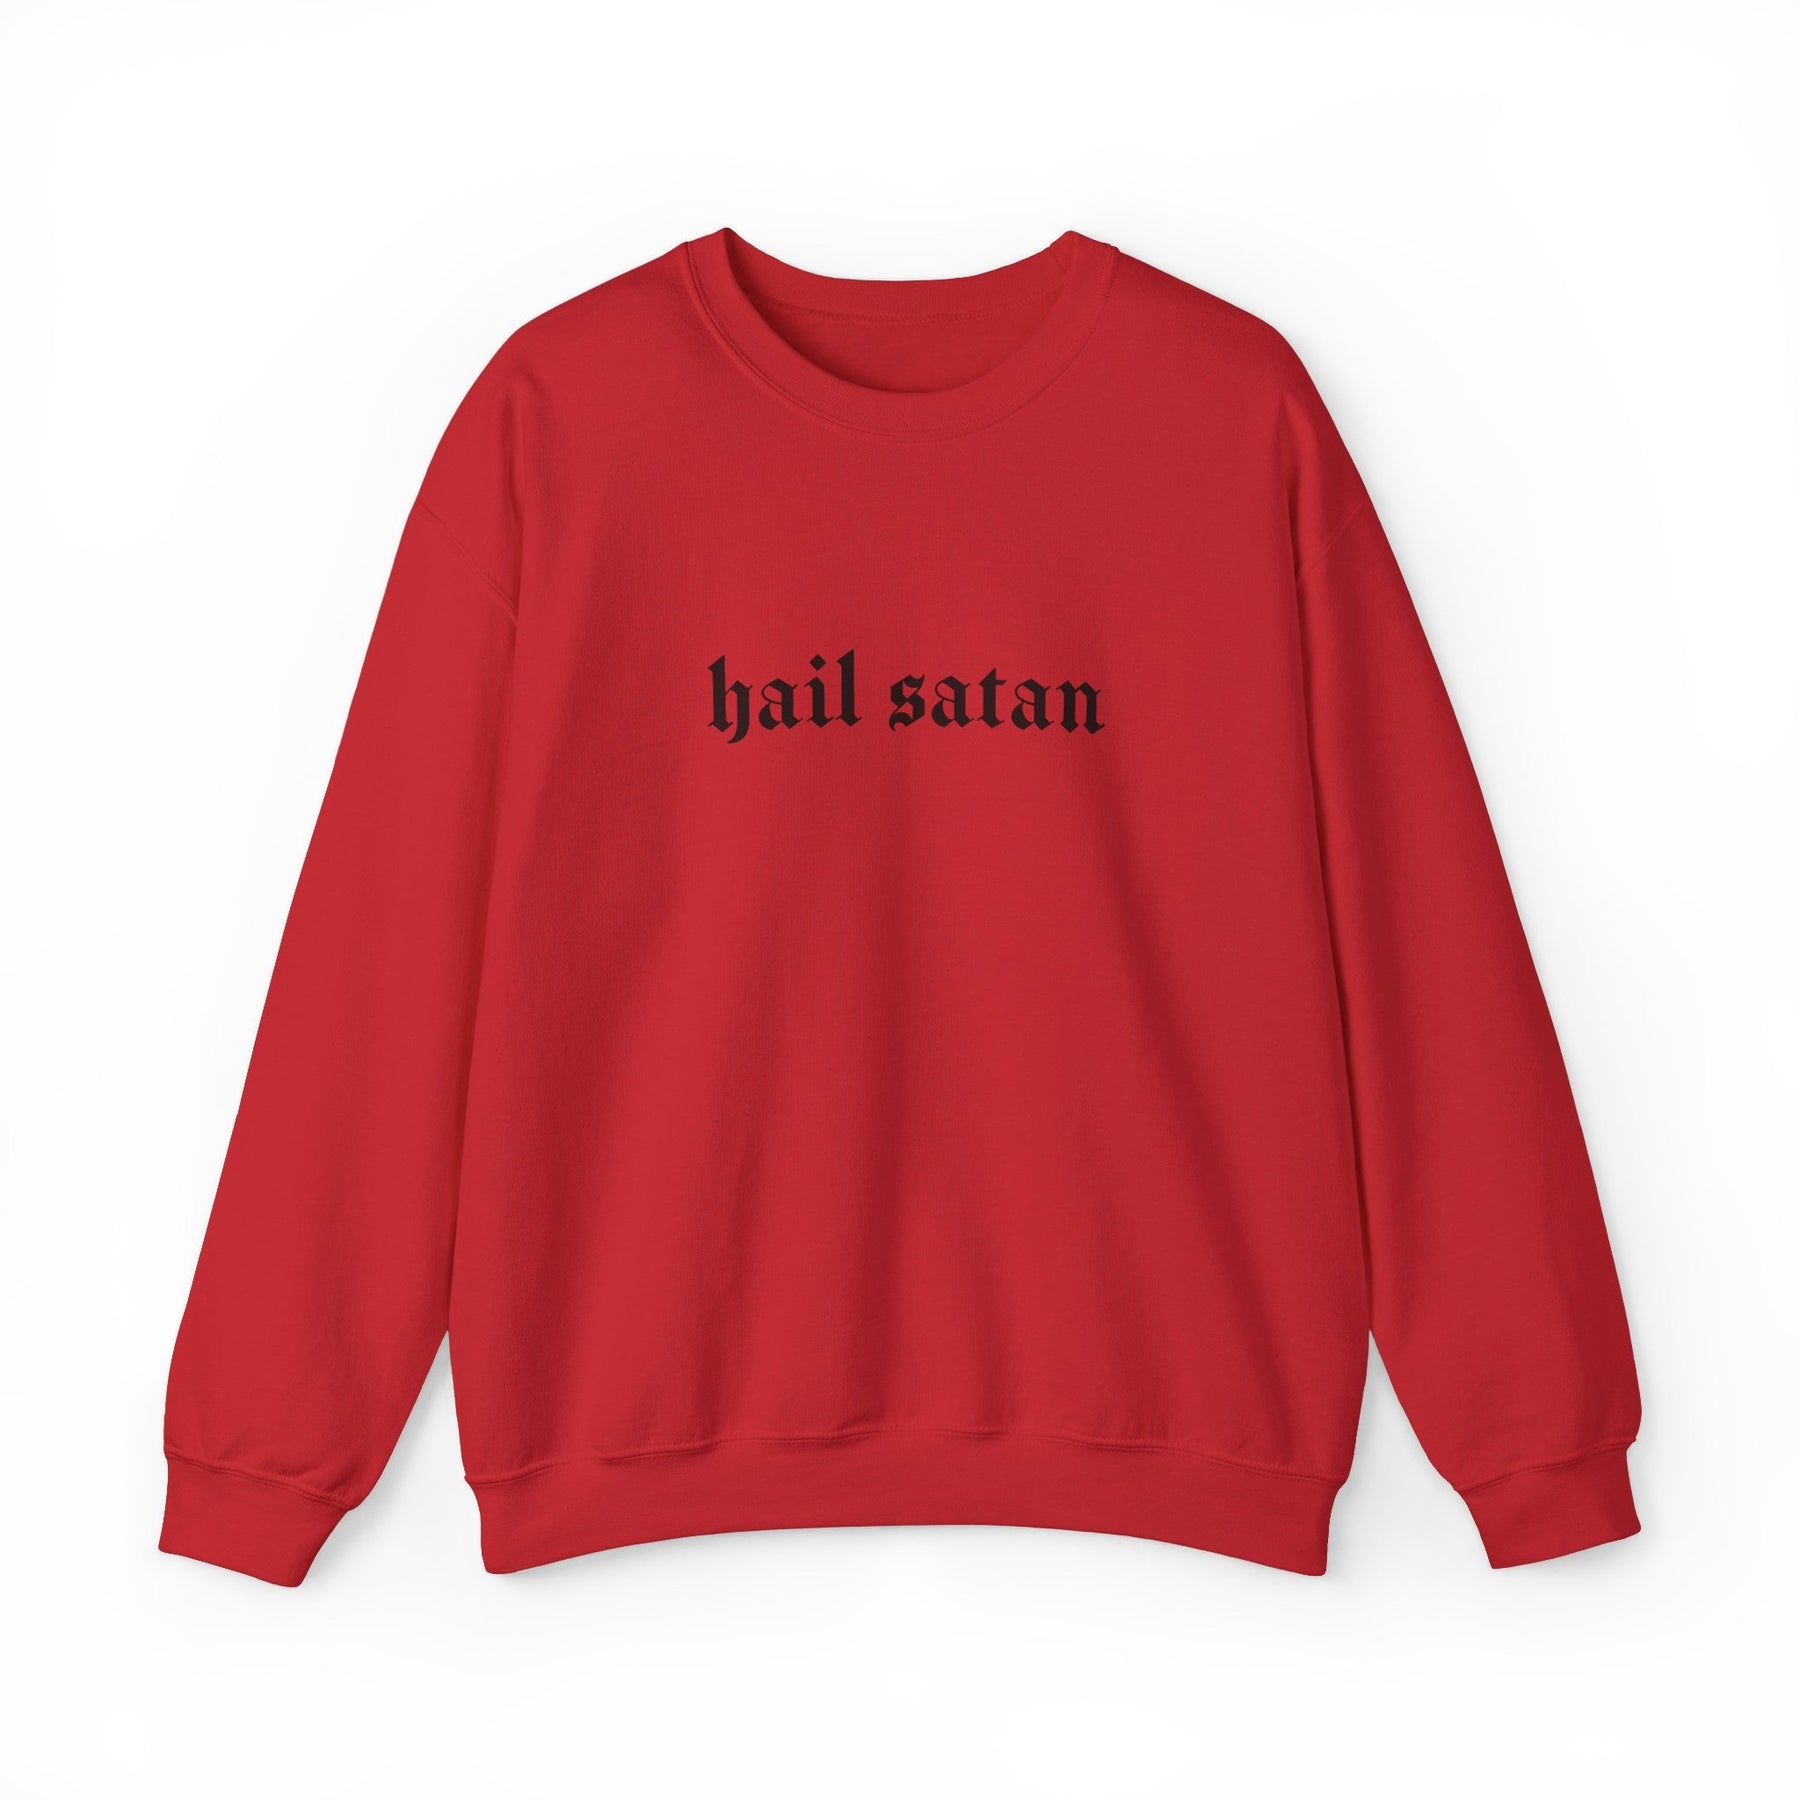 Hail Satan Goth Long Sleeve Crew Neck Sweatshirt - Goth Cloth Co.Sweatshirt14577963896143773660